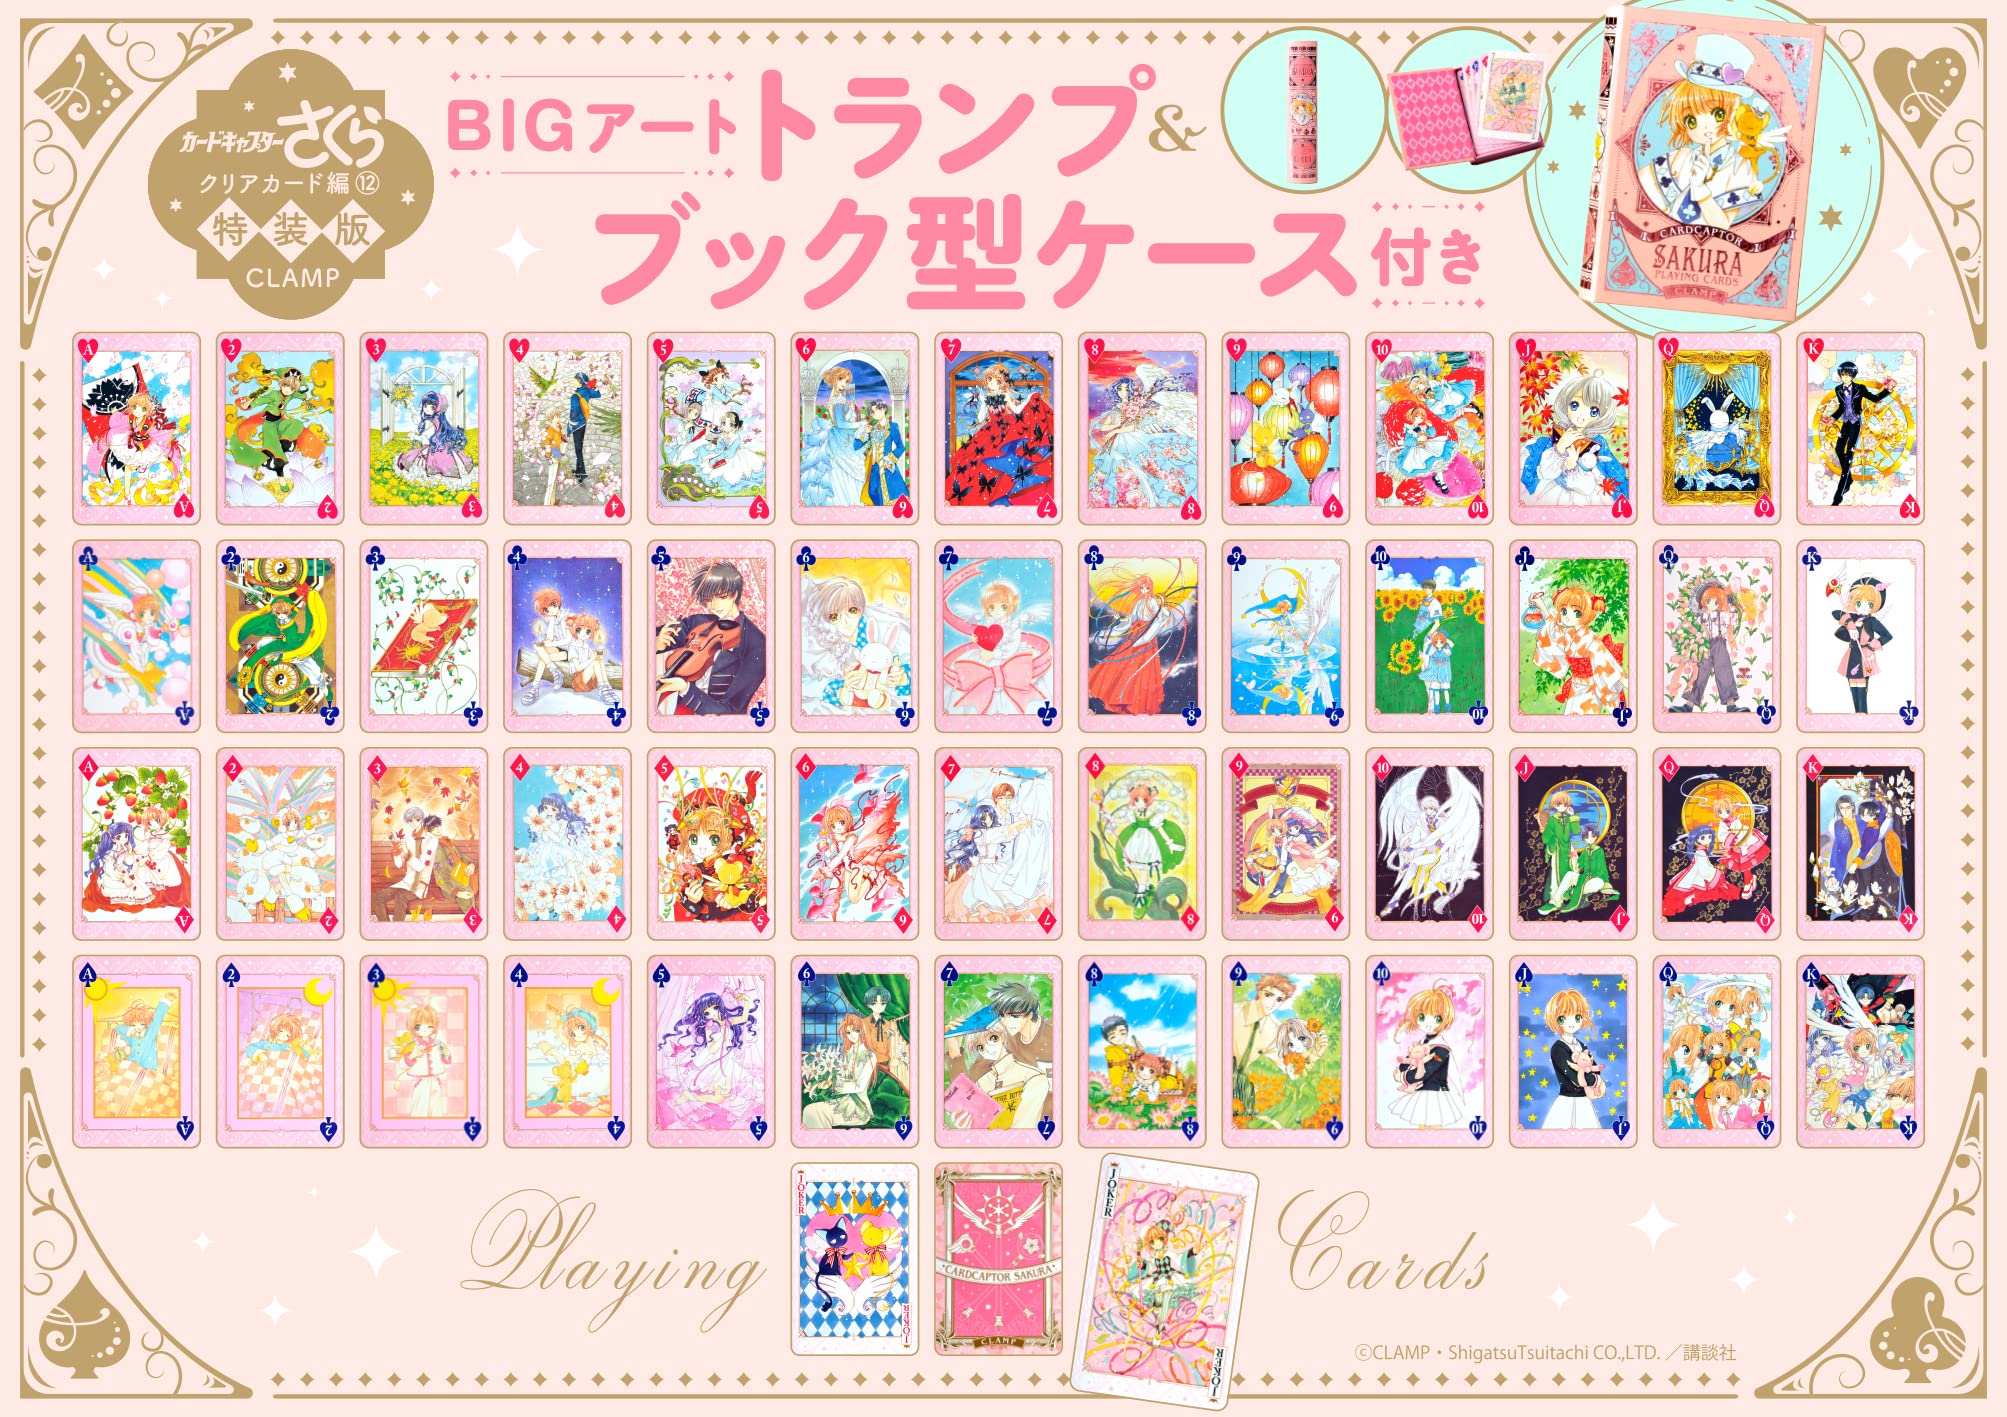 Card Captor Sakura: Card Captor Sakura Special Collection 2